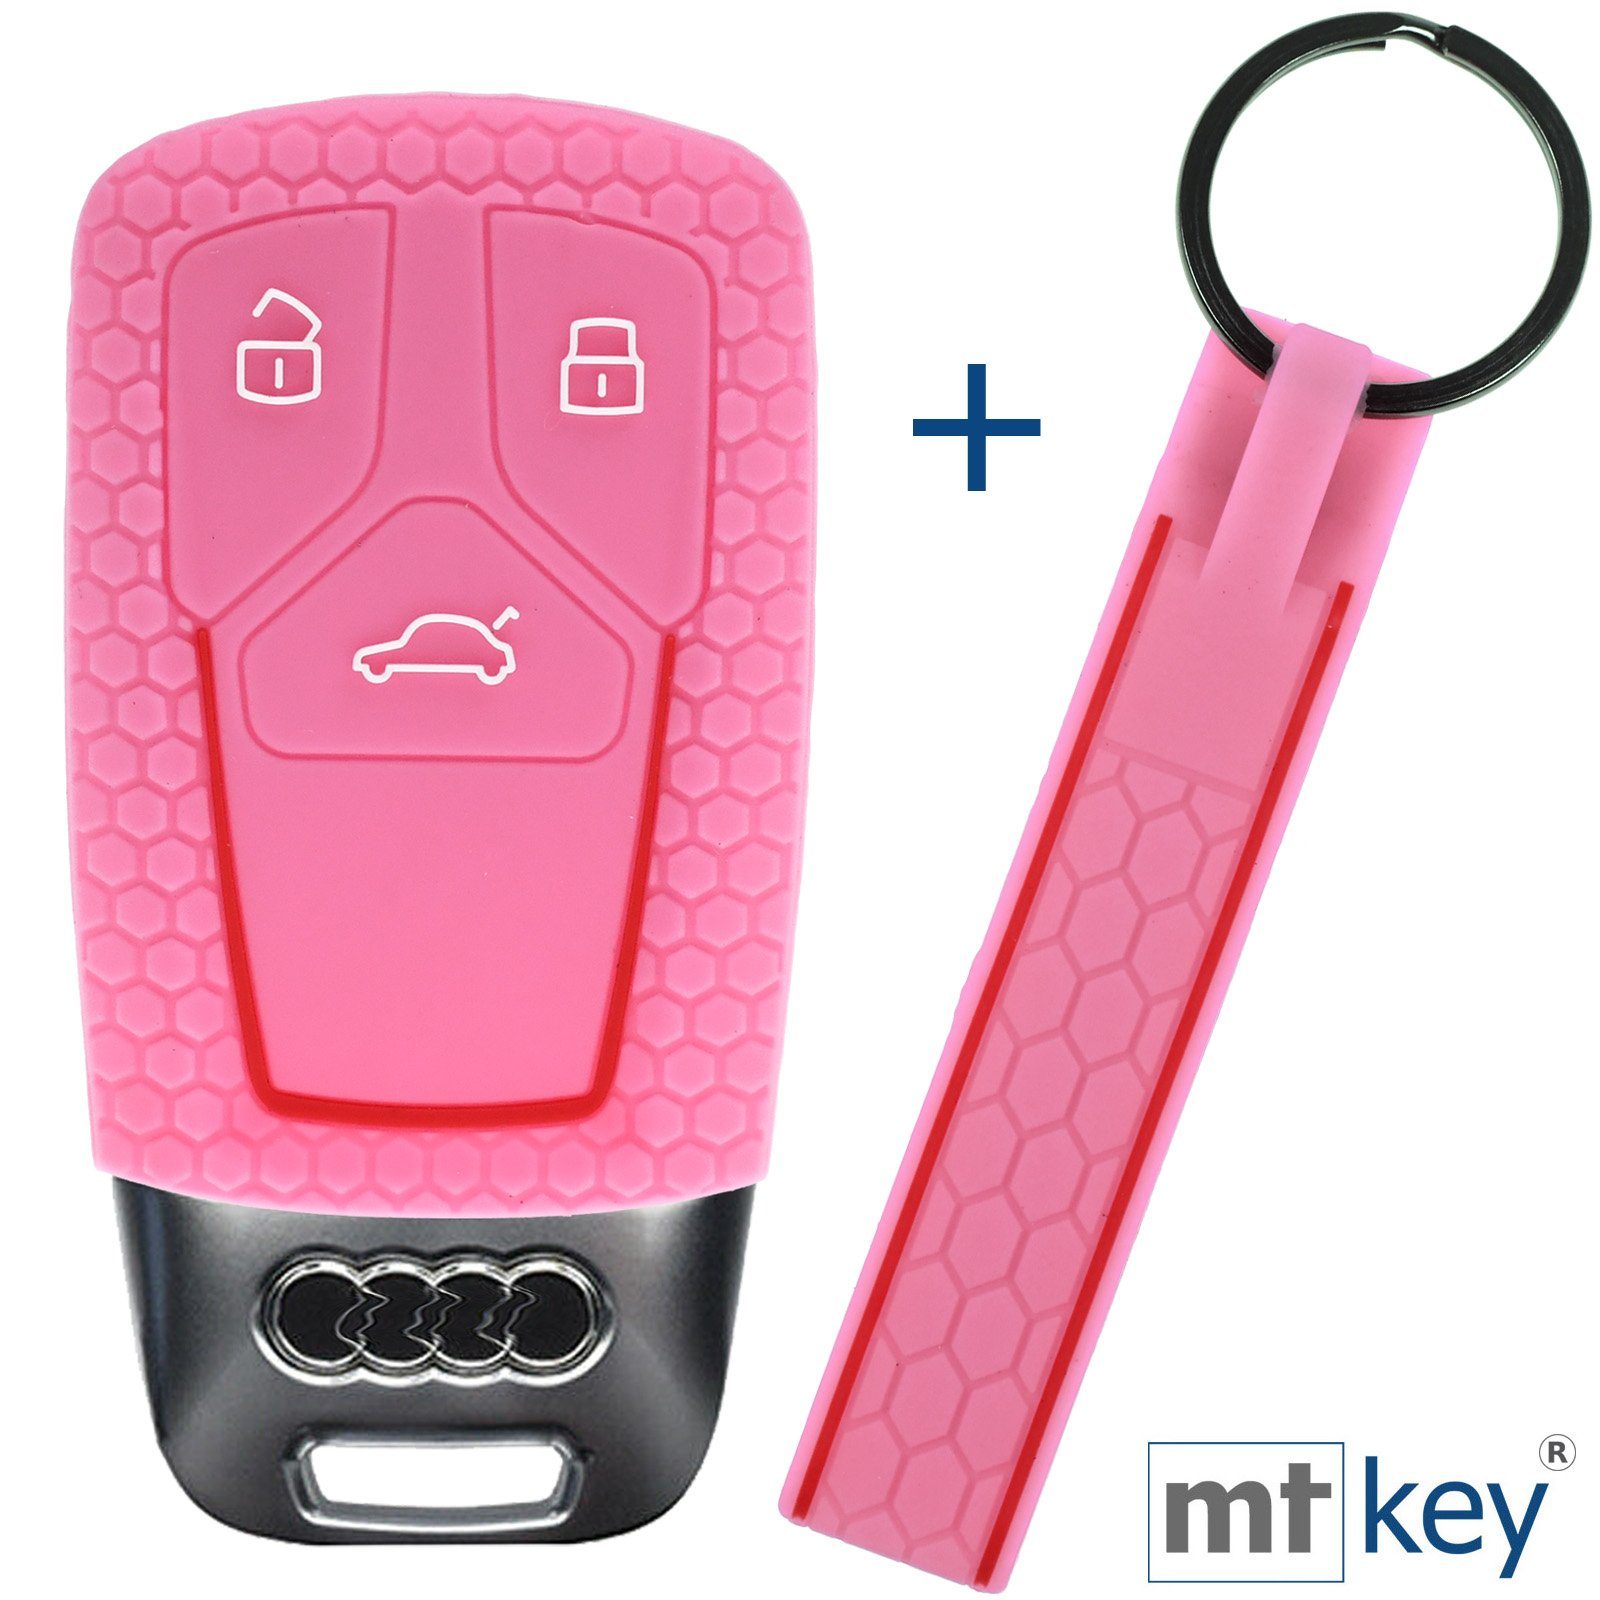 mt-key Schlüsseltasche Autoschlüssel Silikon Schutzhülle im Wabe Design Rosa + Schlüsselband, für Audi A4 A5 A6 A7 TT Q2 Q5 Q7 A8 Q8 3 Tasten KEYLESS SMARTKEY